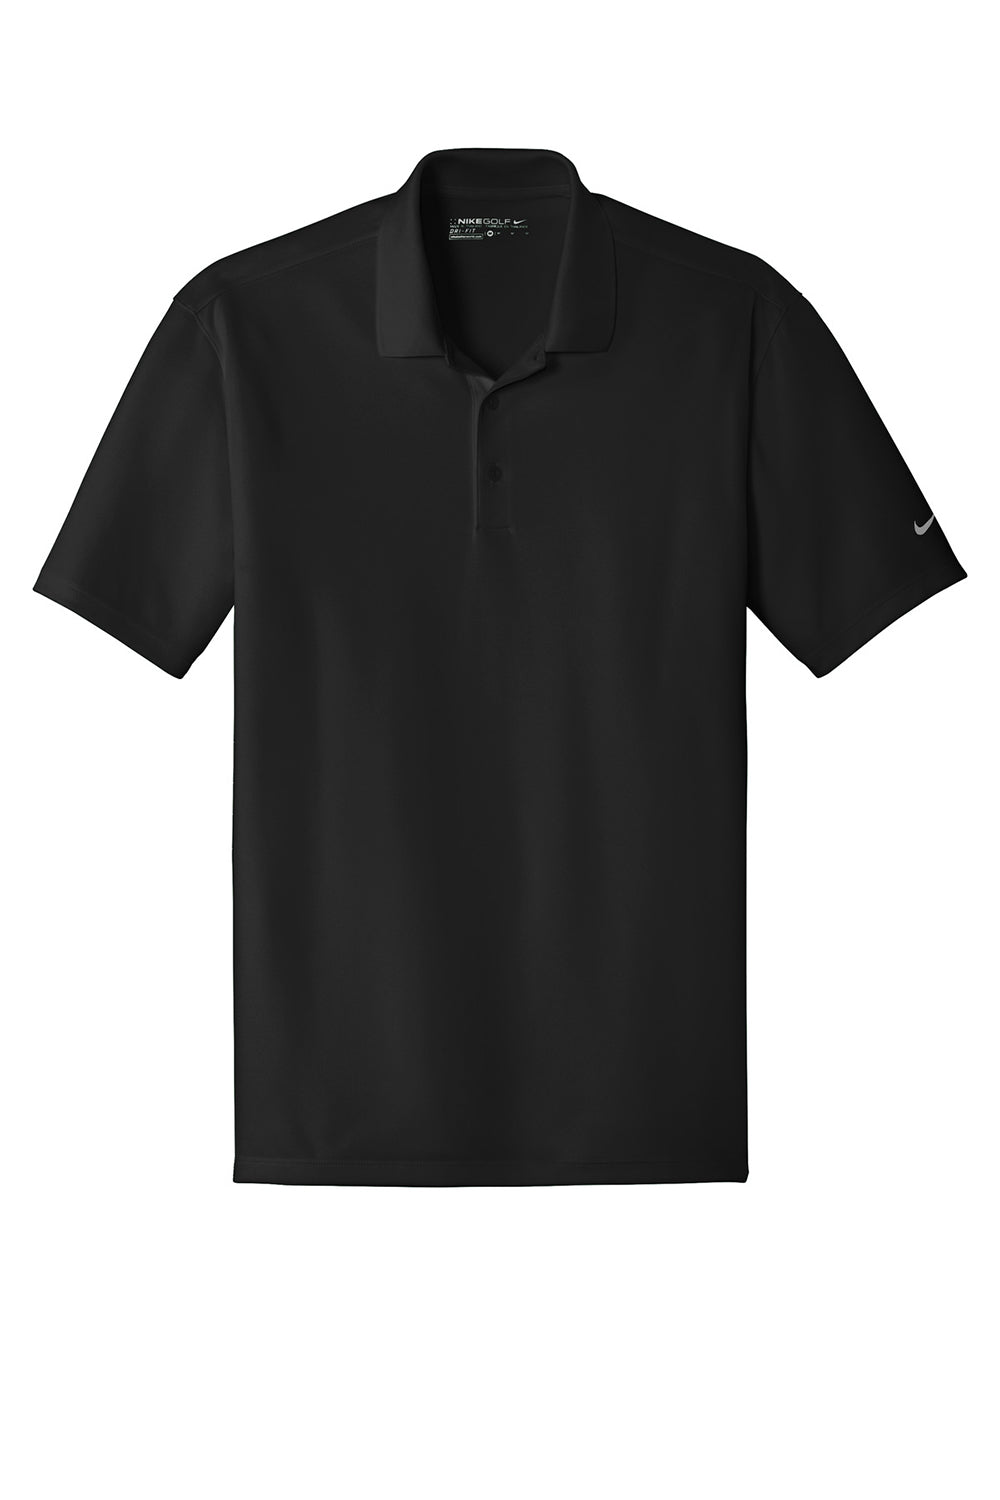 Nike 838956 Mens Players Dri-Fit Moisture Wicking Short Sleeve Polo Shirt Black Flat Front